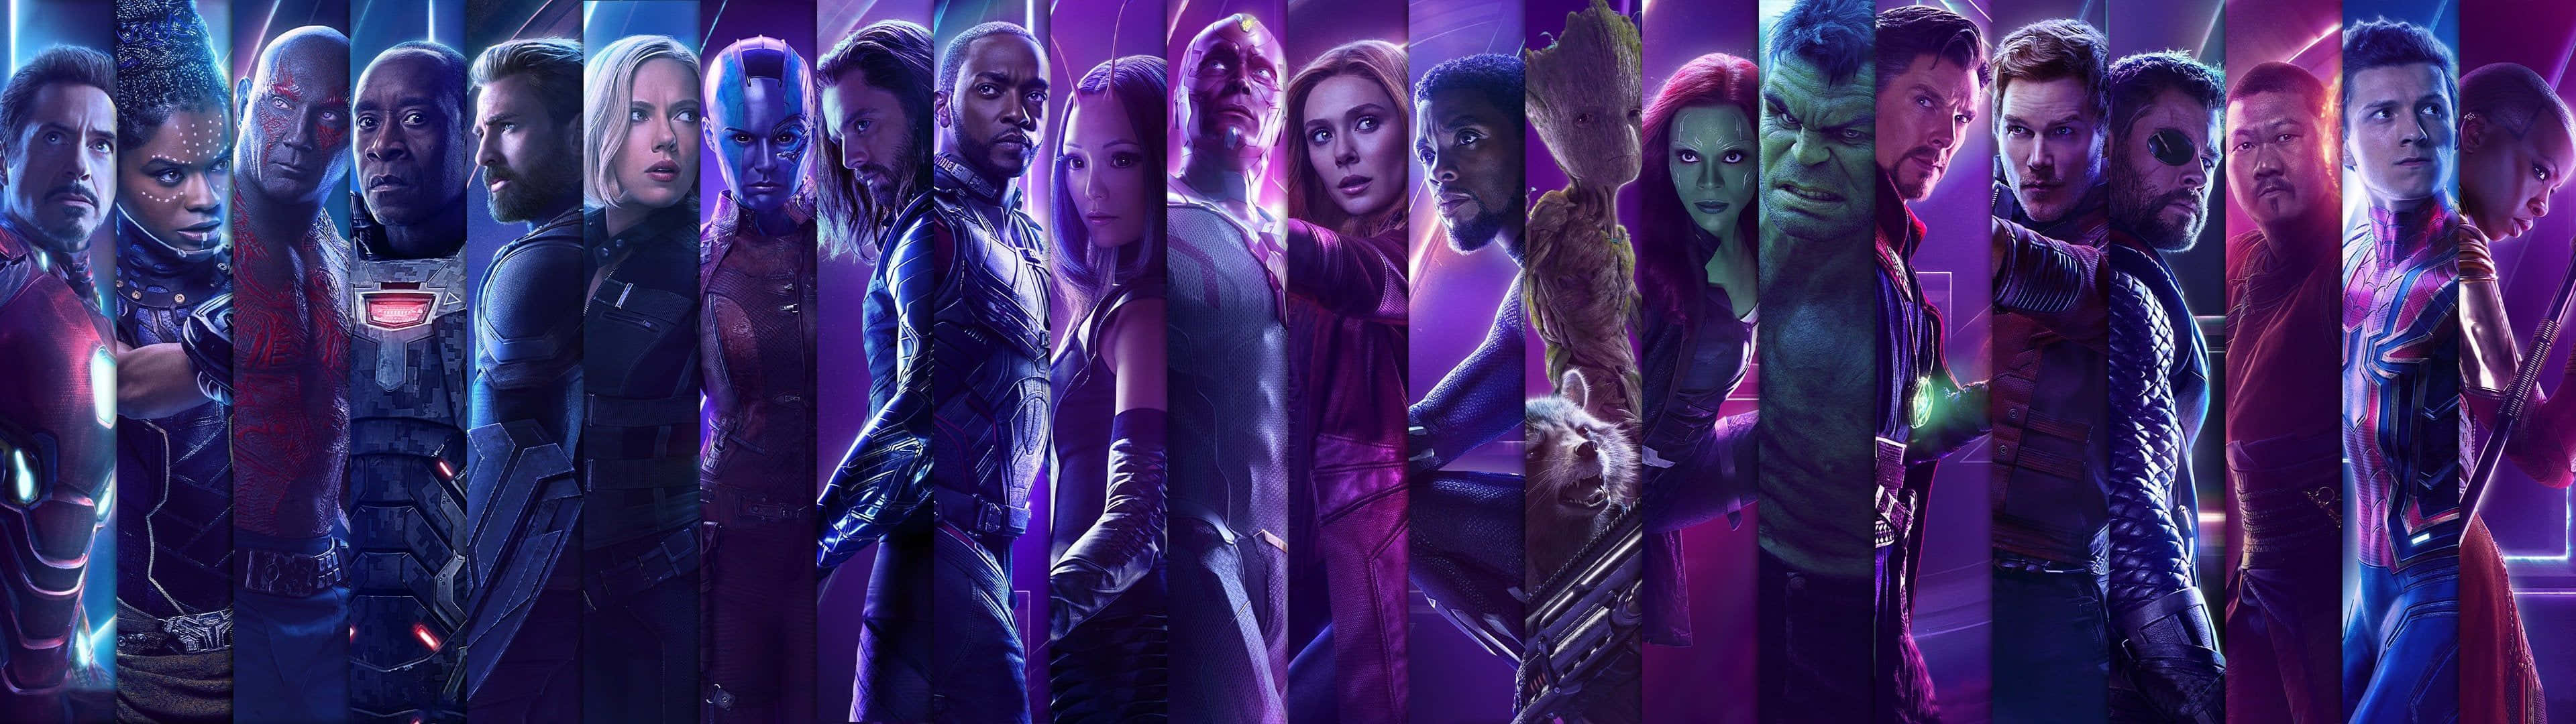 Avengers Infinity War Poster. Wallpaper